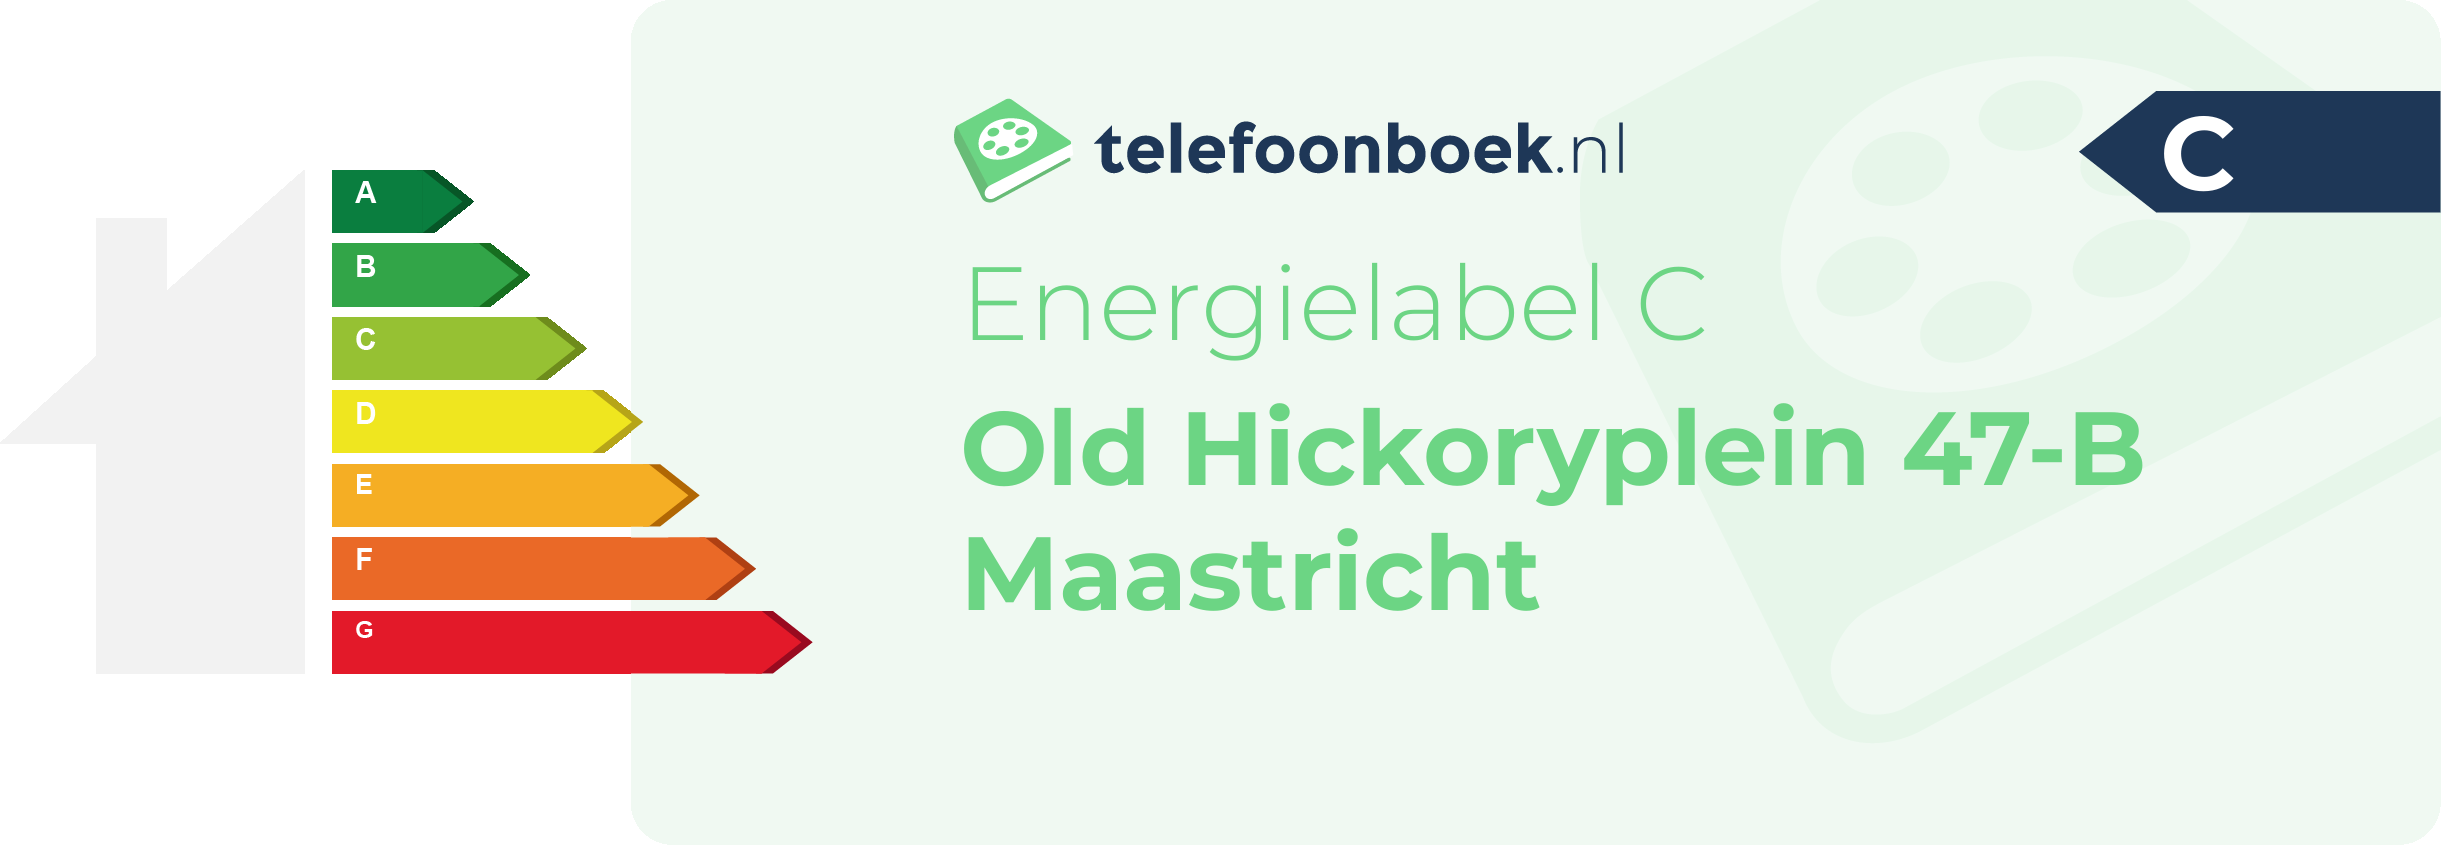 Energielabel Old Hickoryplein 47-B Maastricht